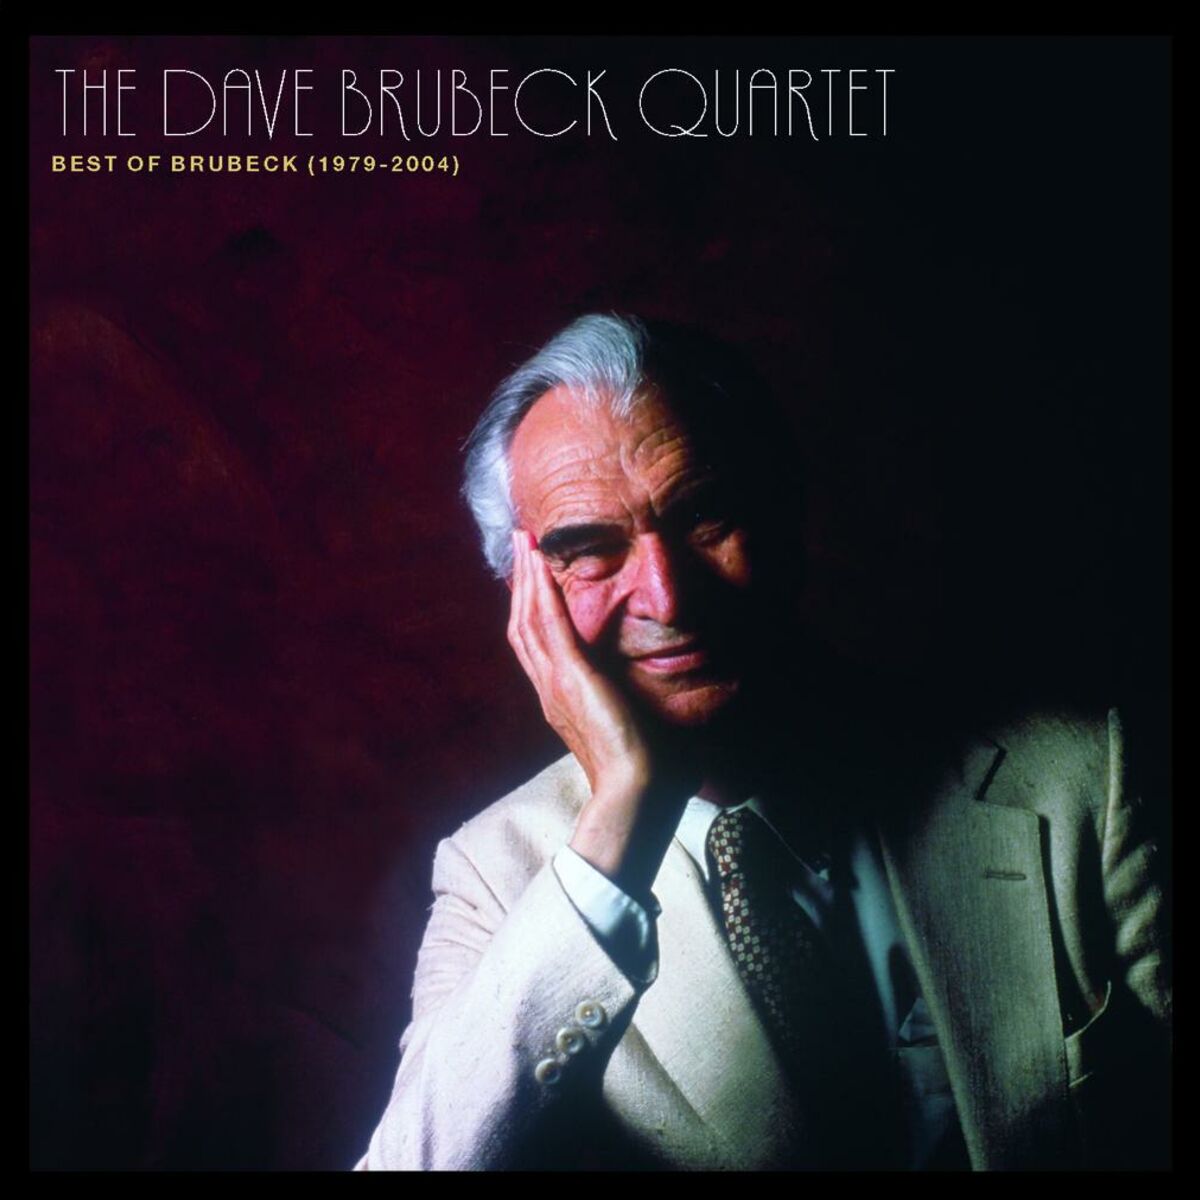 The Dave Brubeck Quartet: albums, songs, playlists | Listen on Deezer